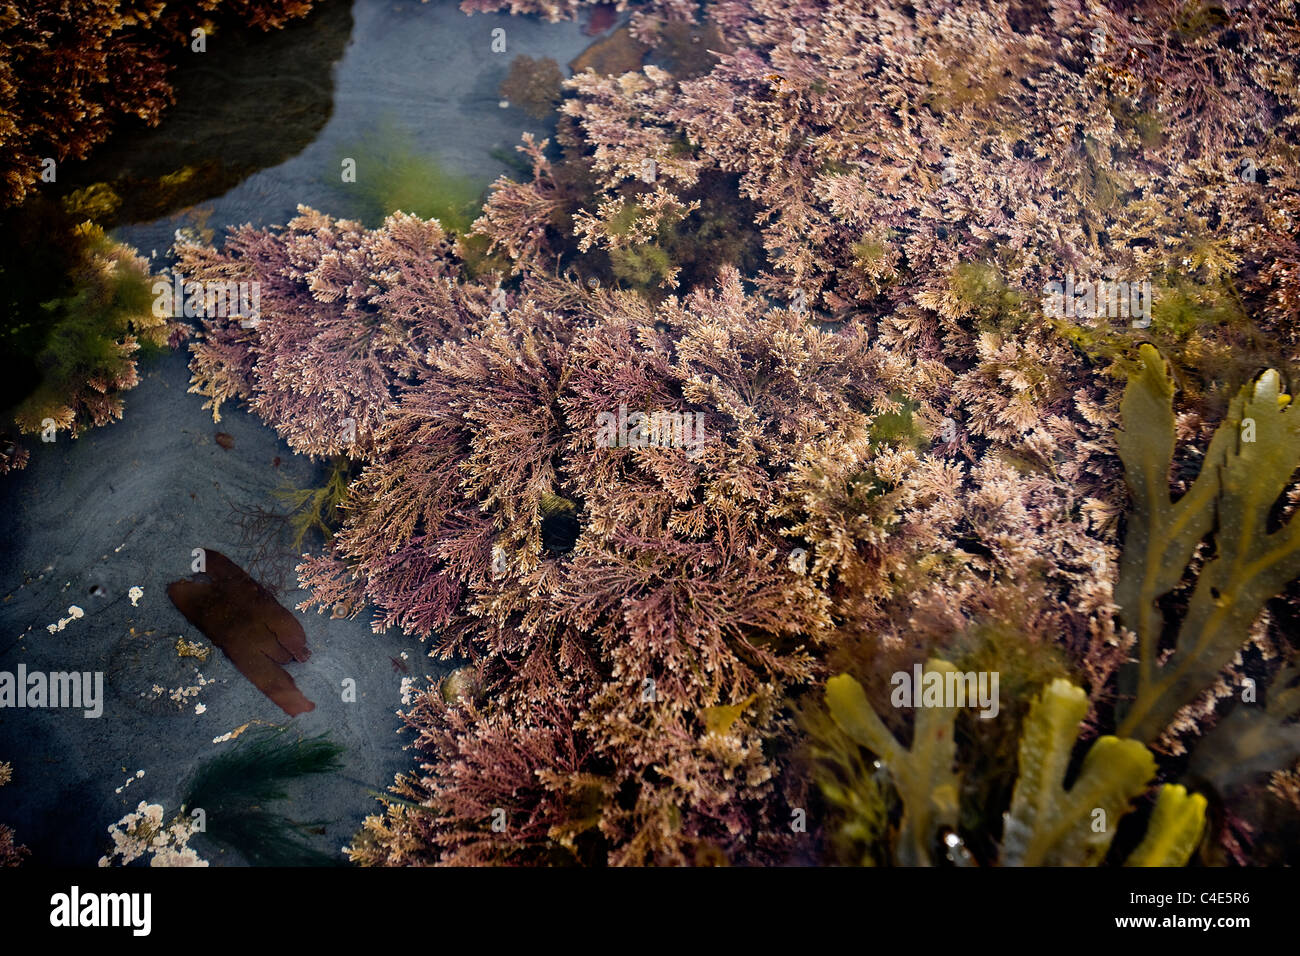 Red Seaweed in a rock pool, Runswick Bay, East Coast Yorkshire, England Stock Photo